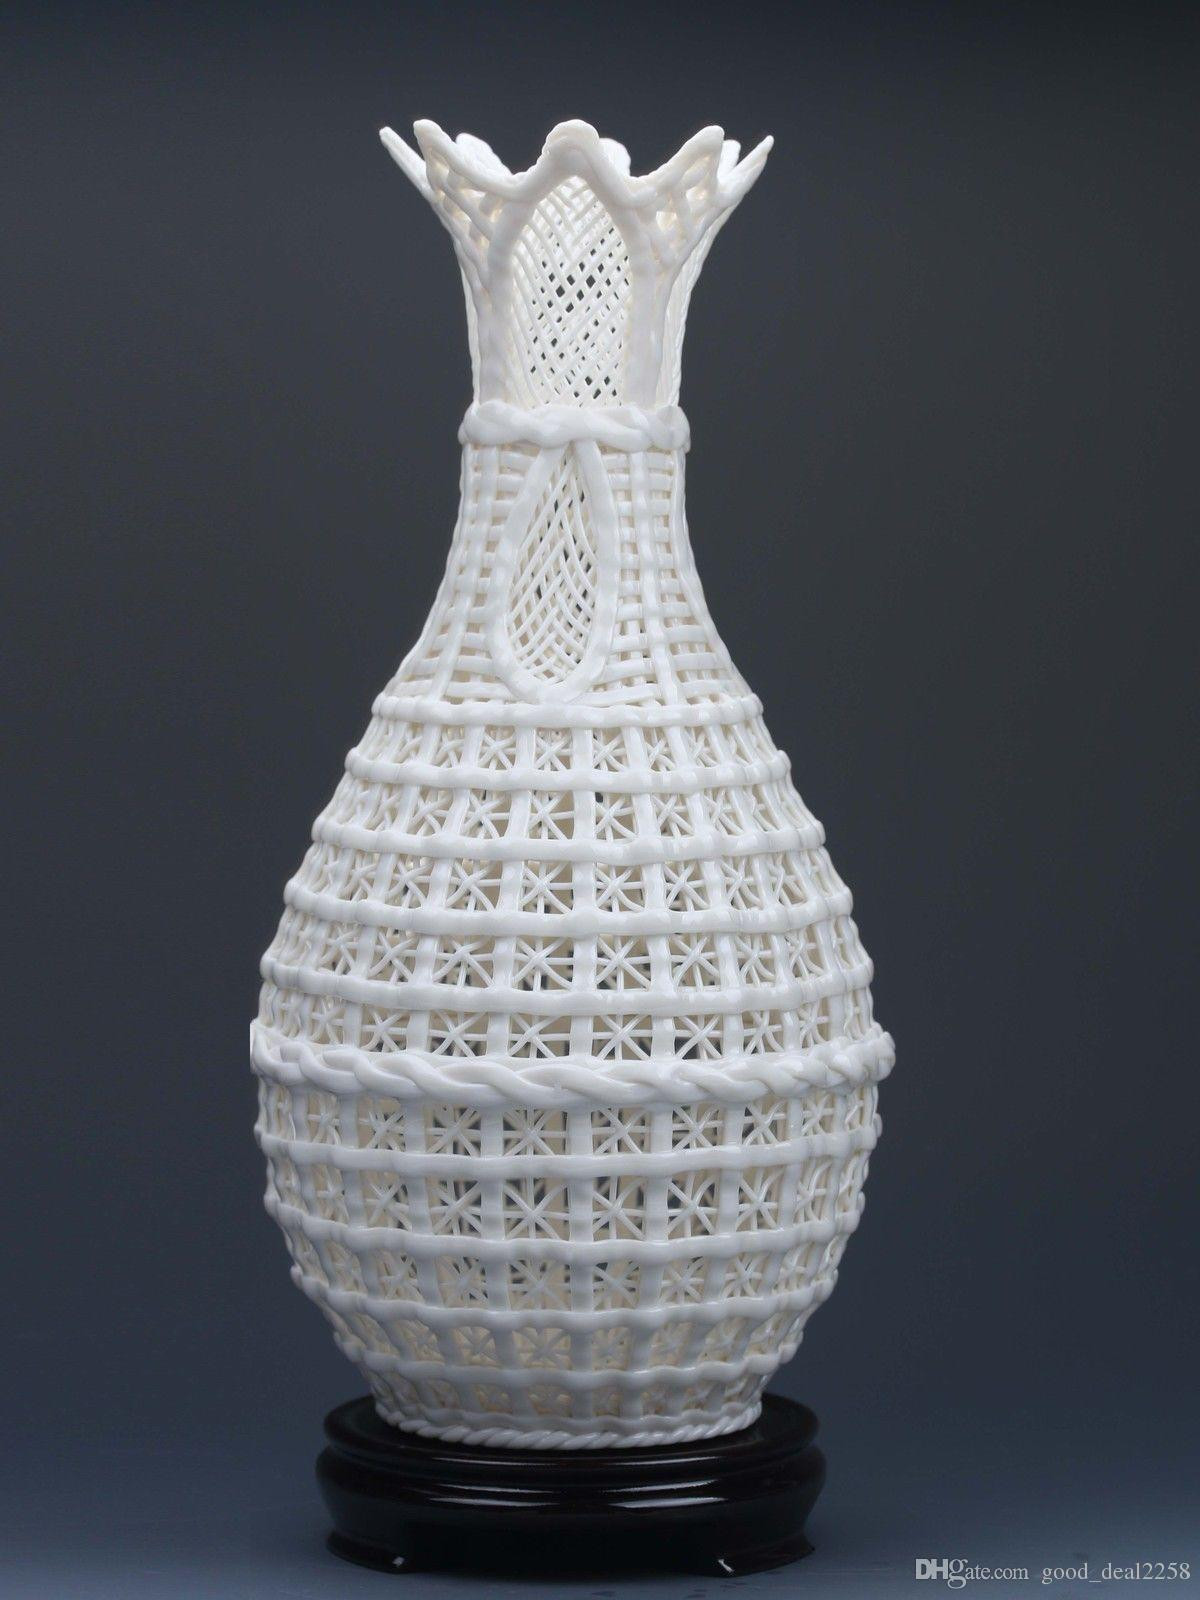 27 Cute Macau Porcelain Vase 2024 free download macau porcelain vase of 2018 chinese dehua porcelain hand carved hollowed art white vase in 2018 chinese dehua porcelain hand carved hollowed art white vase g177 from good deal2258 65 33 dhg